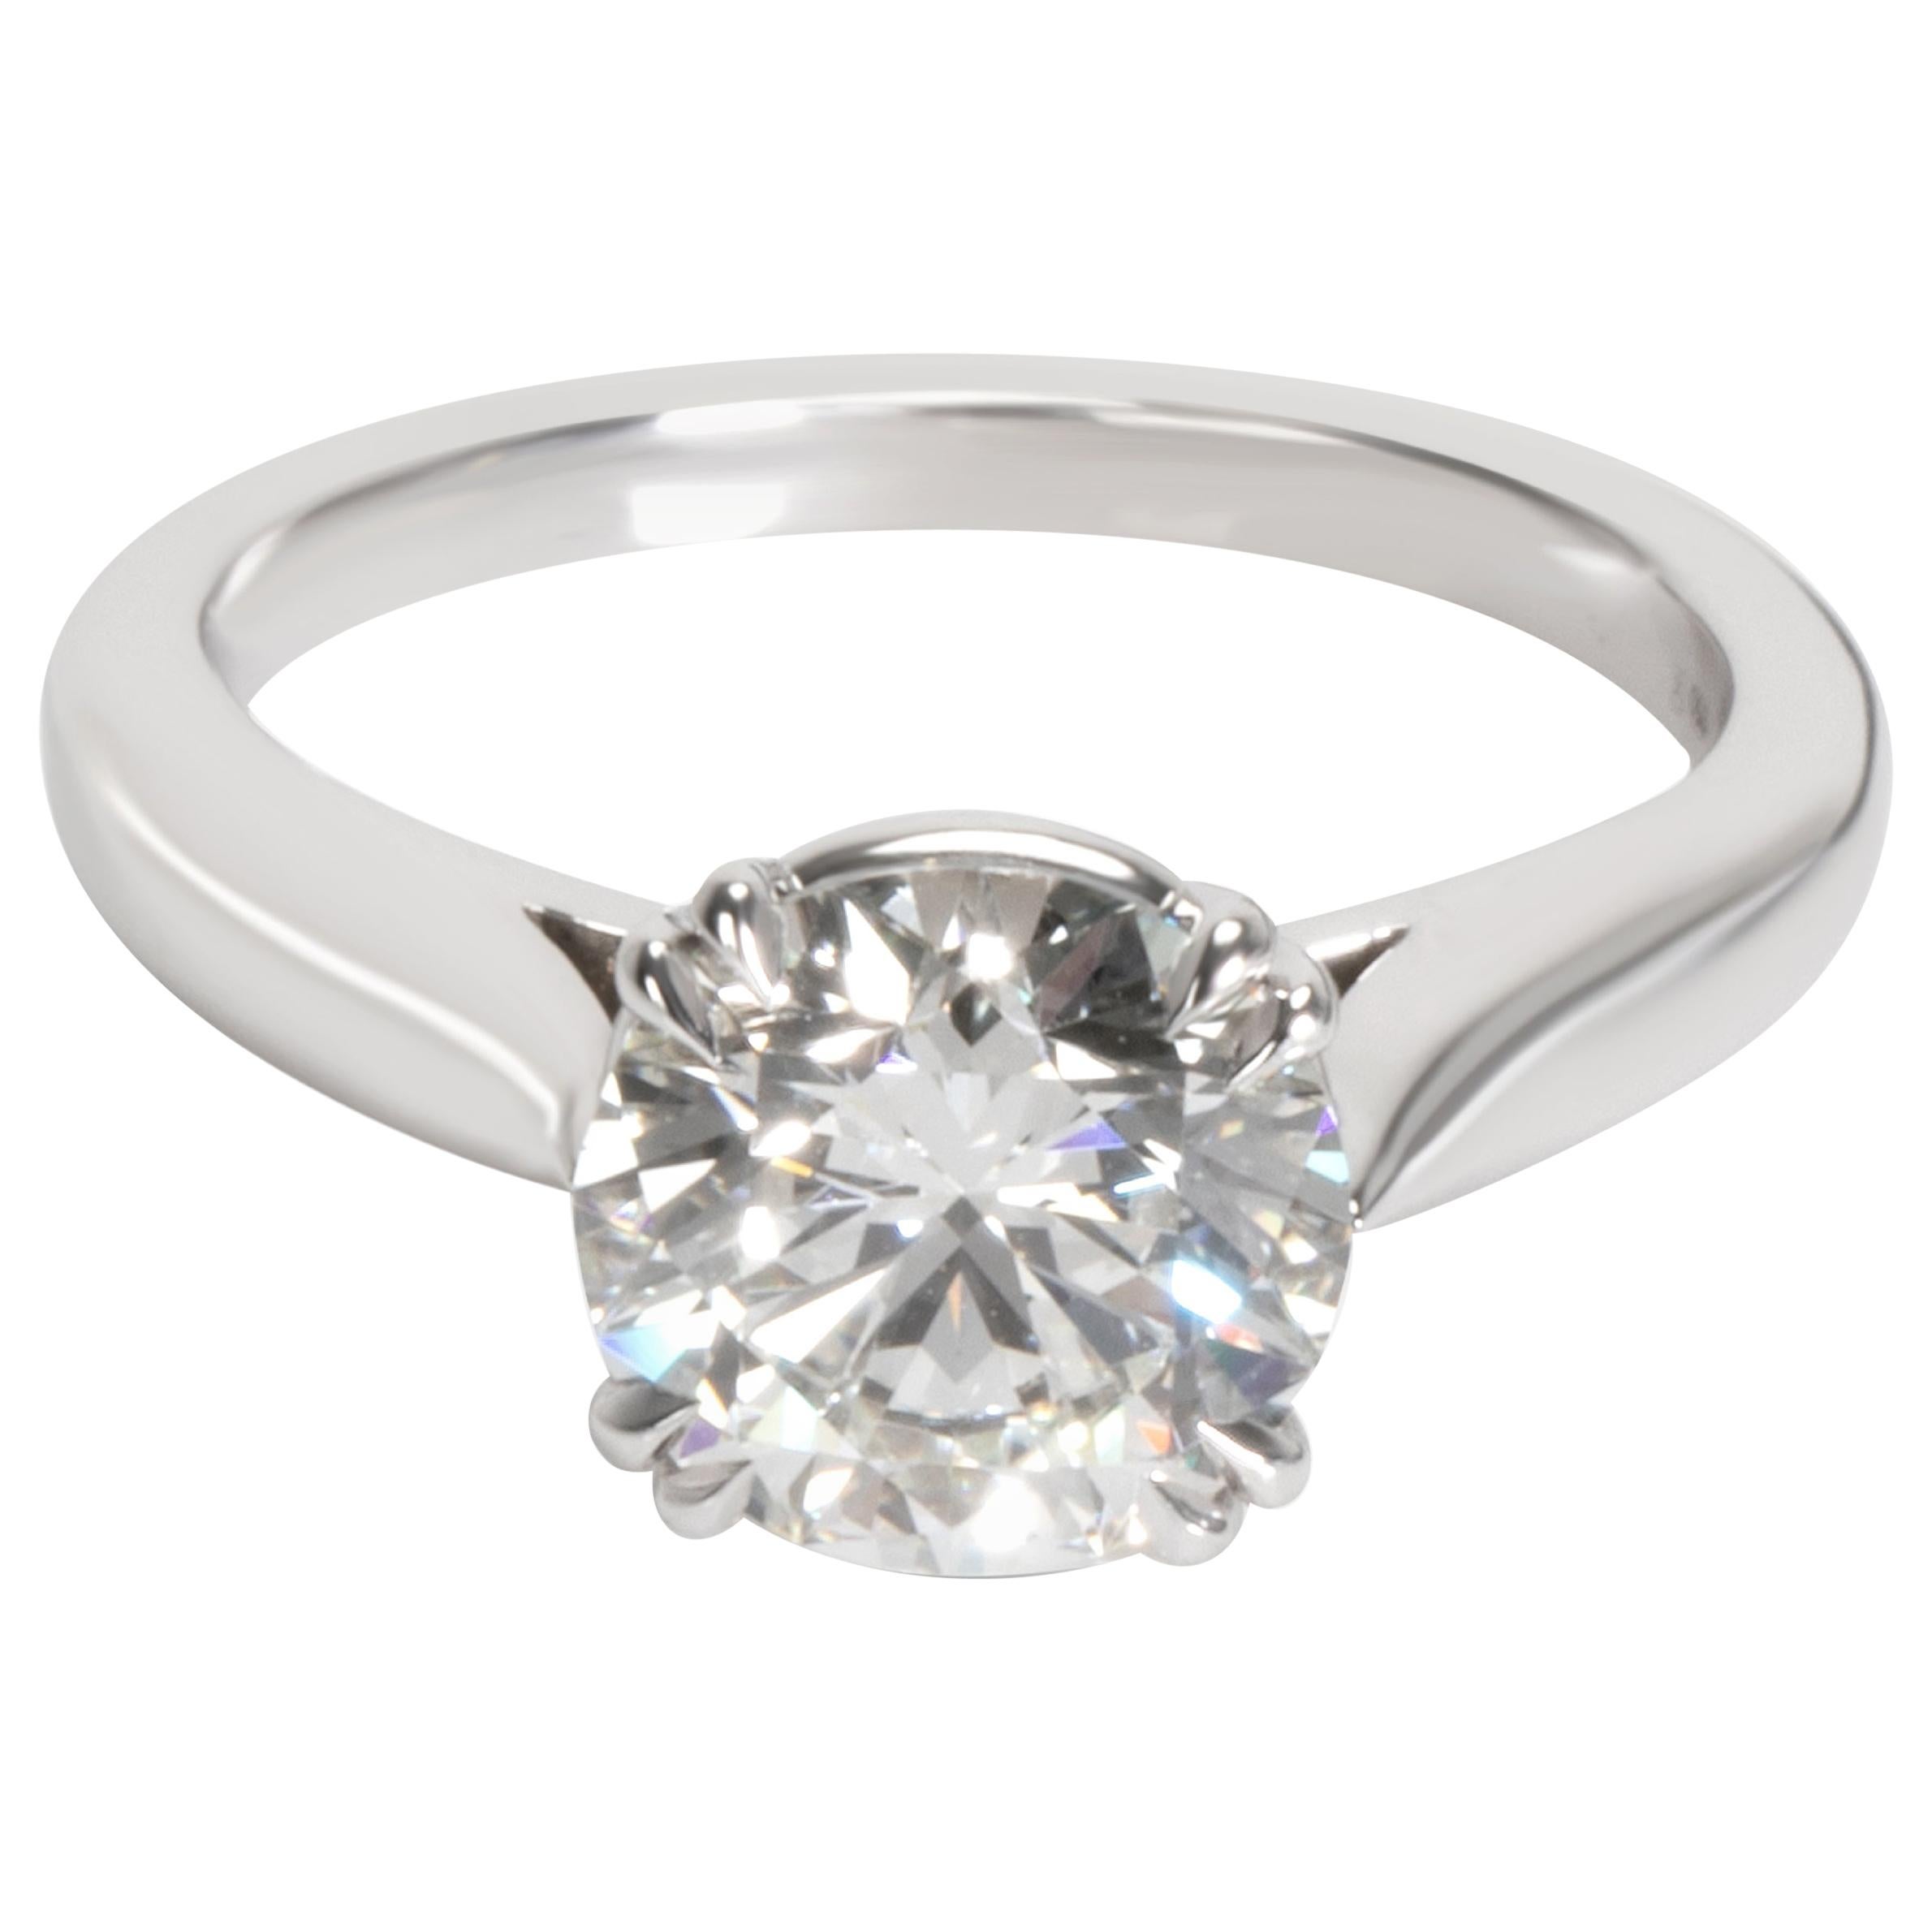 Harry Winston Diamond Engagement Ring in Platinum GIA Certified F VS1 1.61